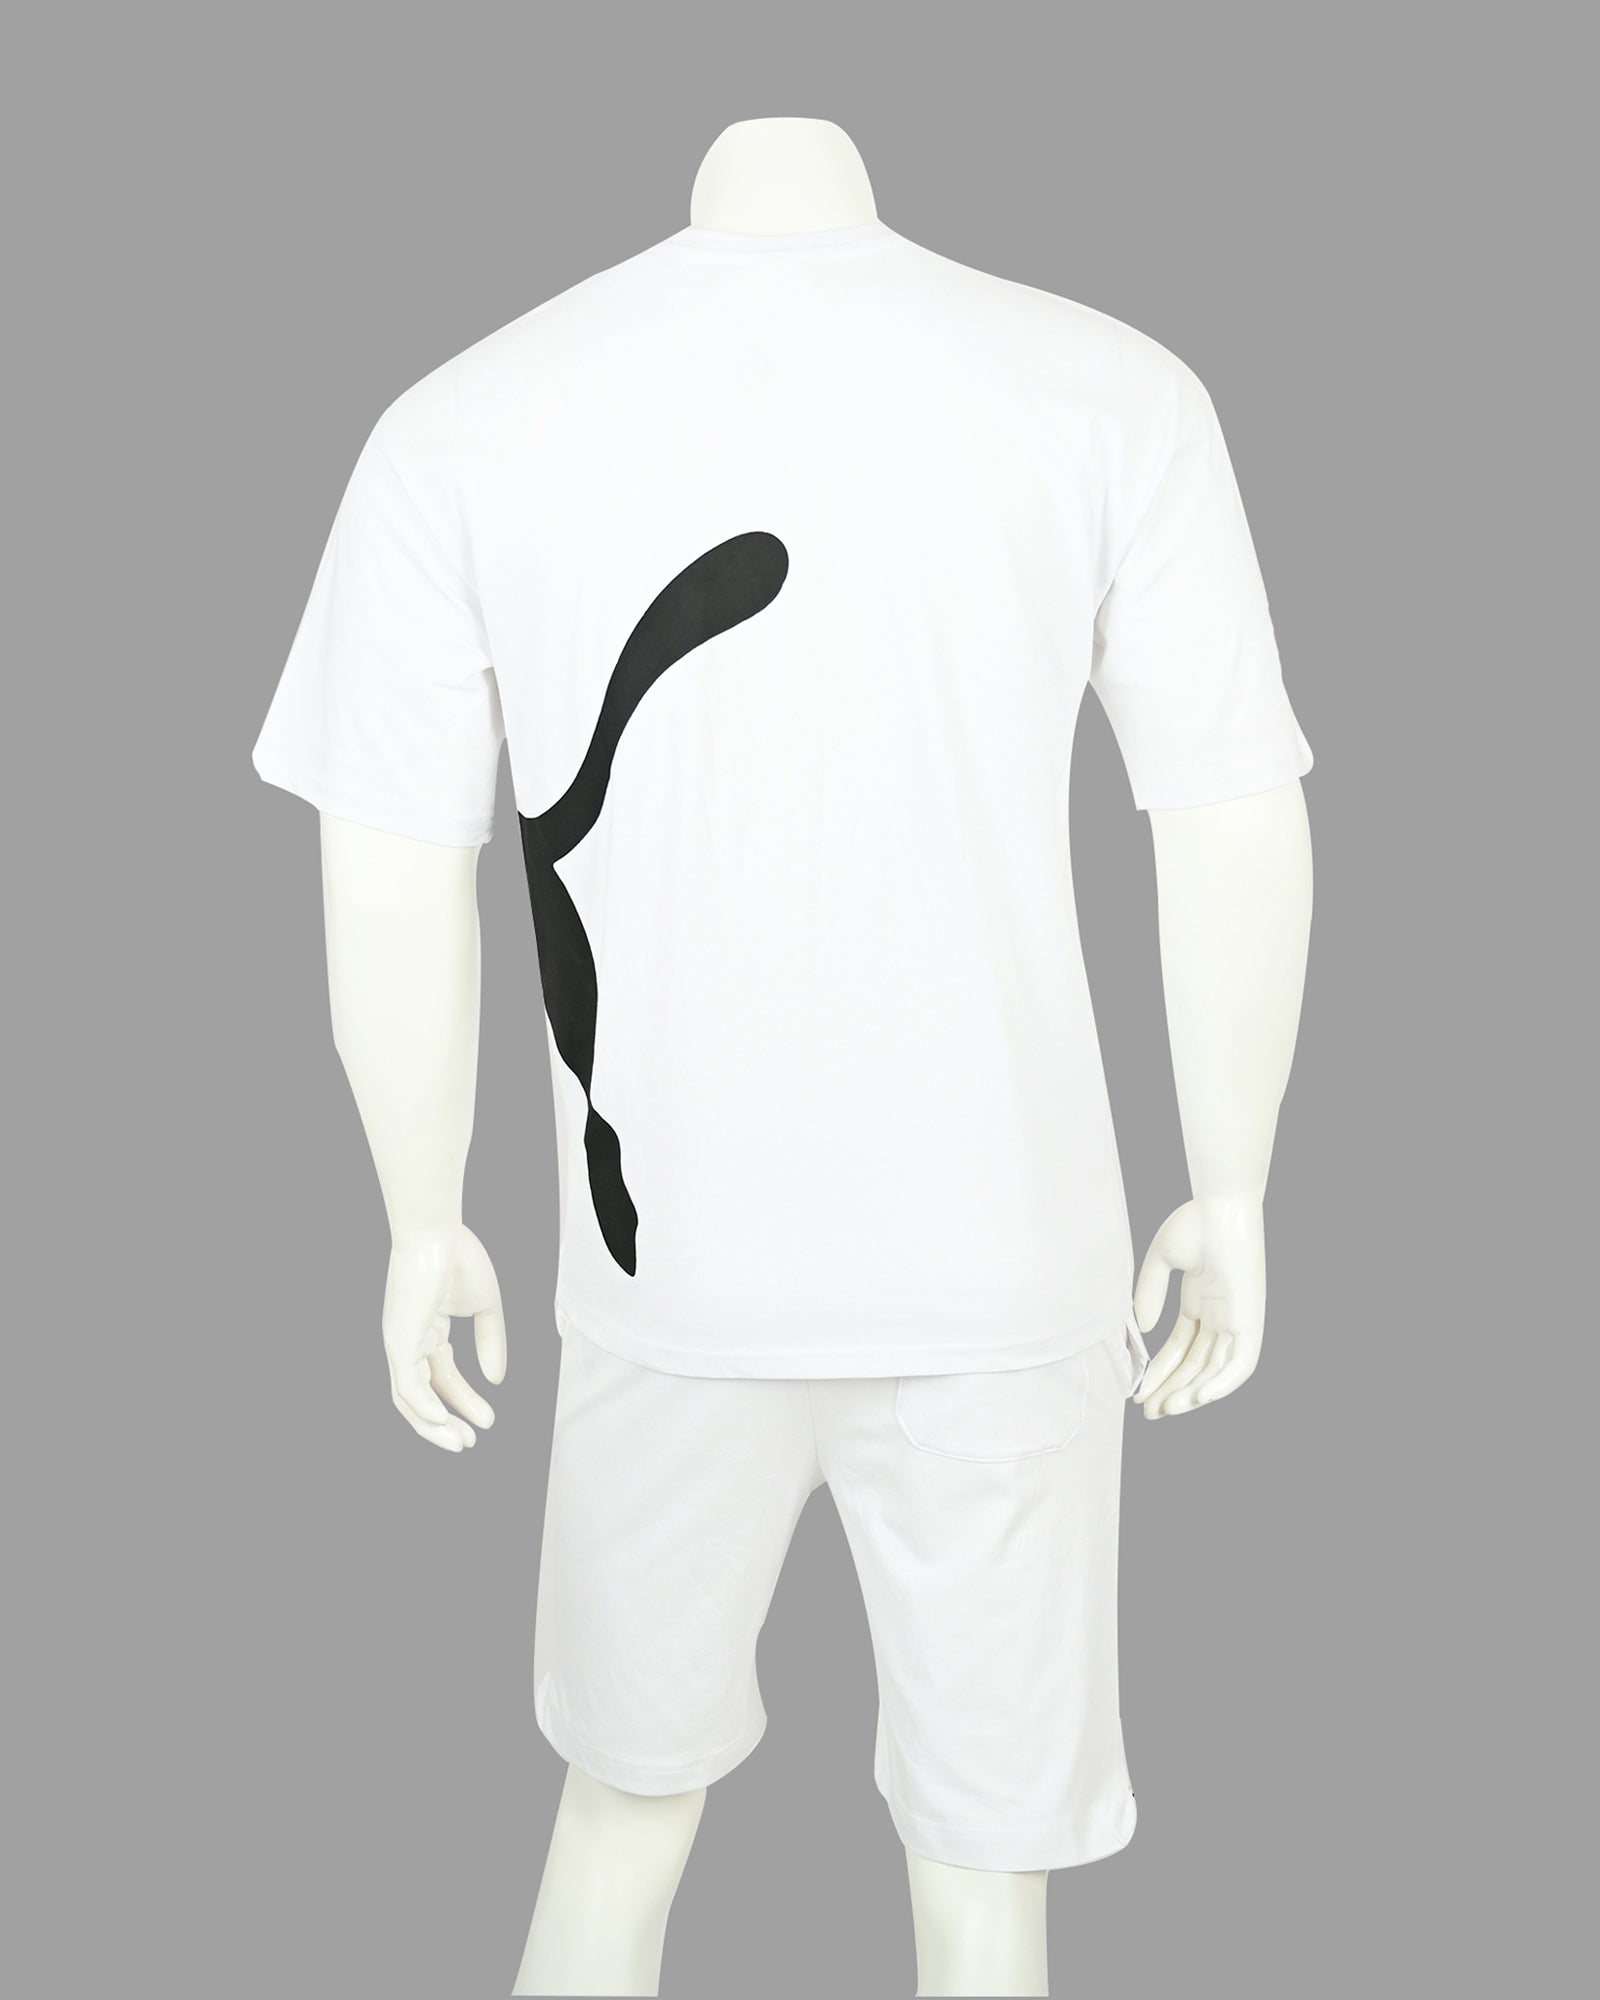 Men's Oversize Print T-Shirt & Shorts 2 Piece Set